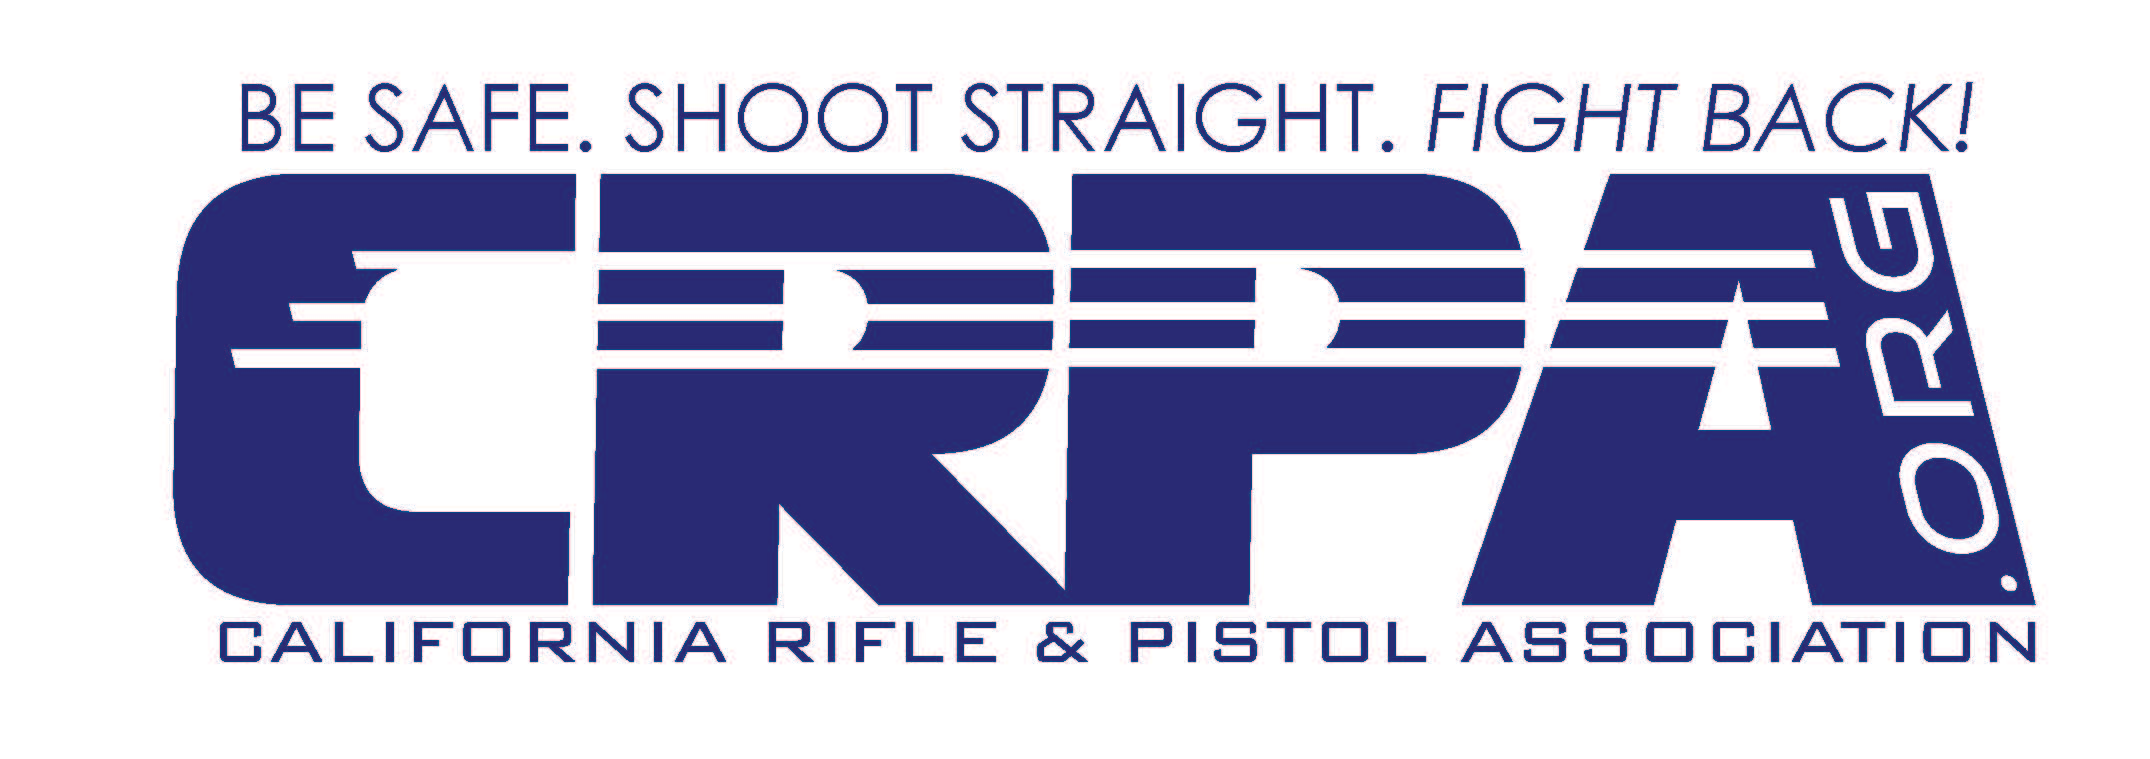 CRPA logo